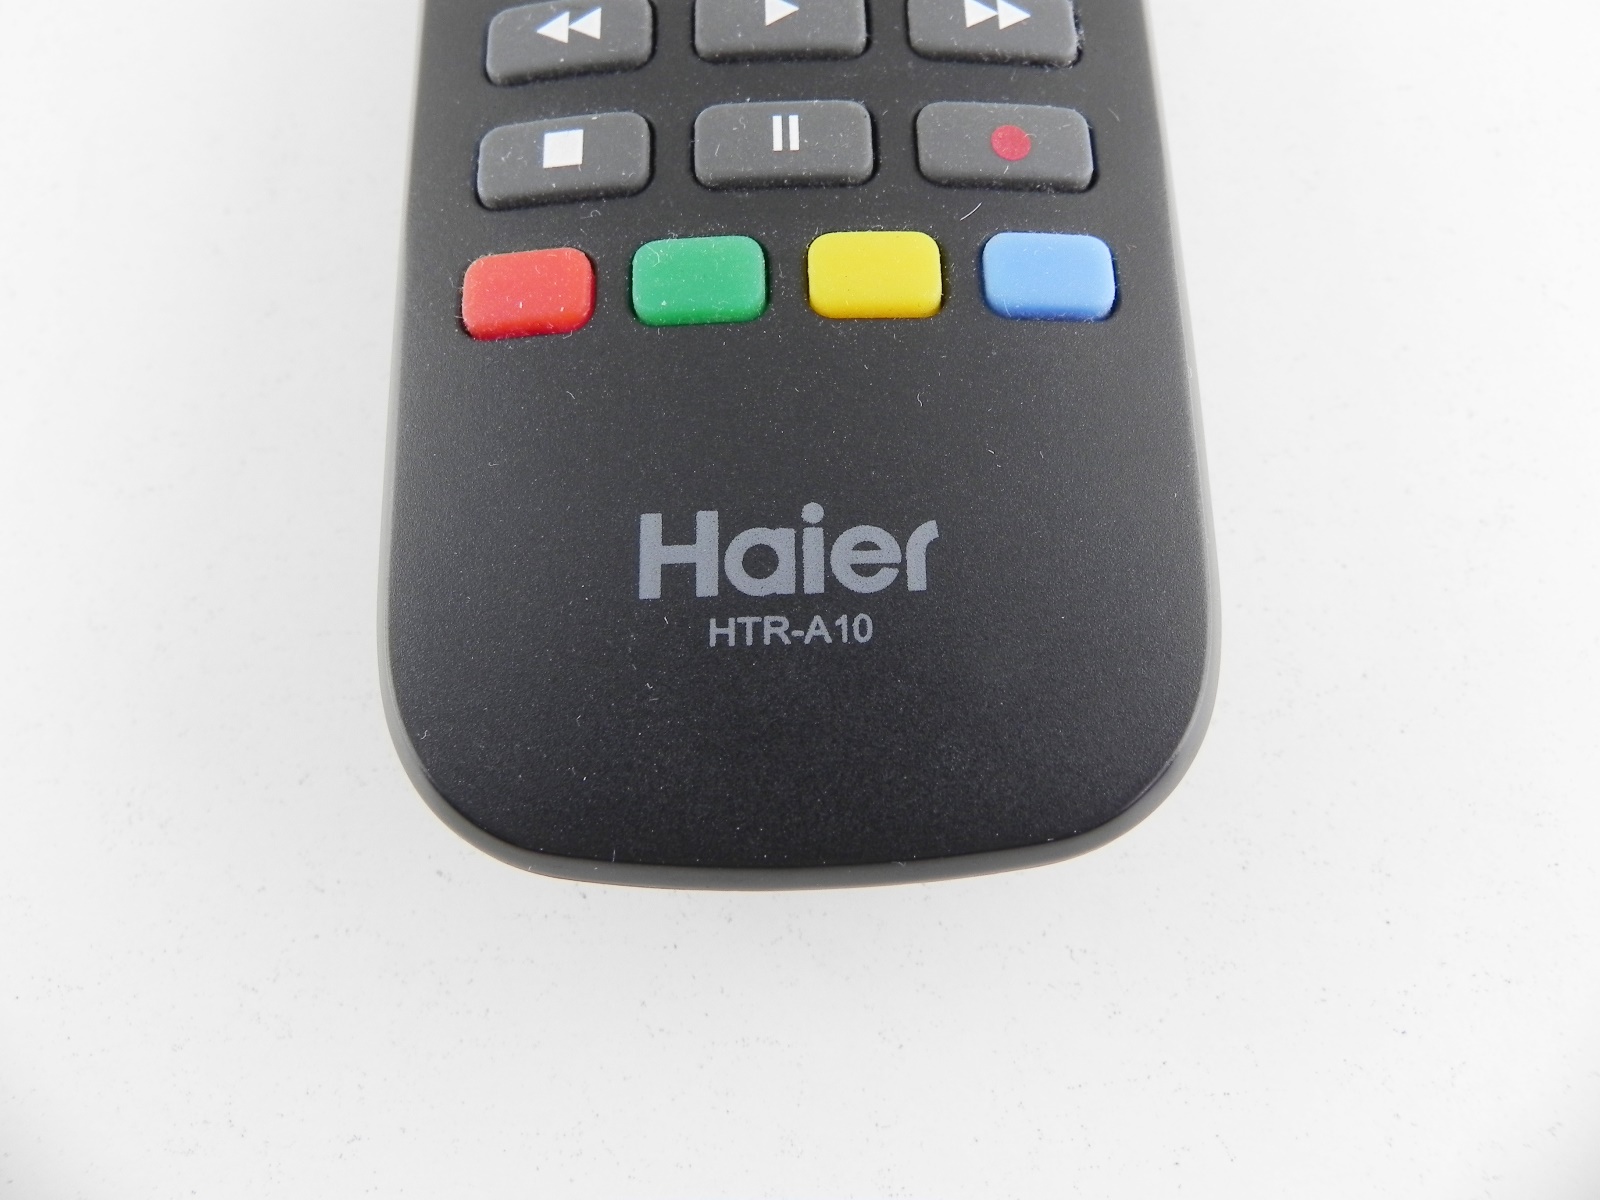 Haier телевизор s1 пульт. Пульт Haier HTR-a10. Haier le32k6000s. HTR-a10 пульт. Пульт для телевизора Haier HTR-a10.